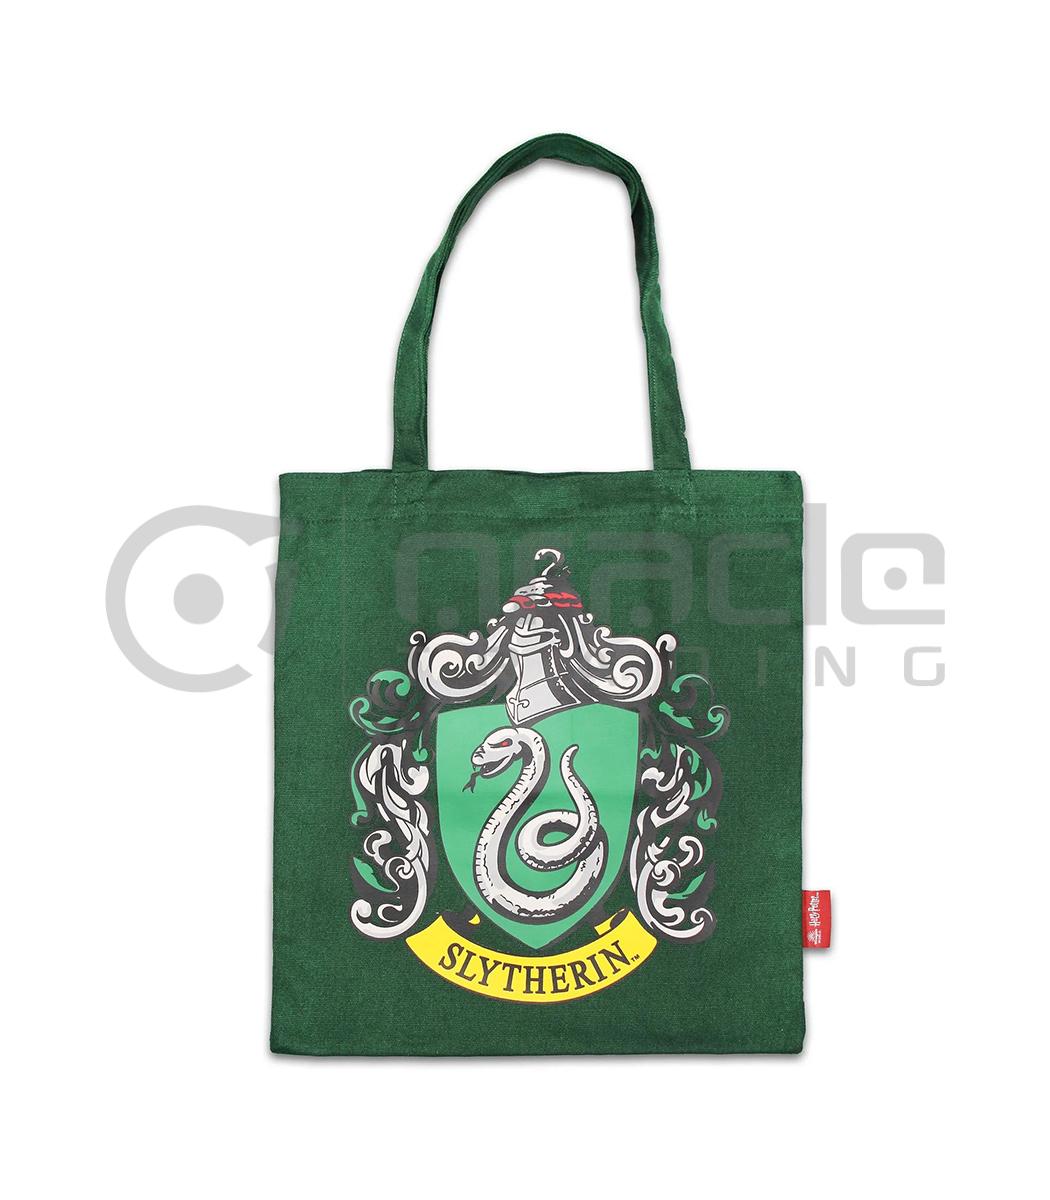 Harry Potter Tote Bag - Slytherin